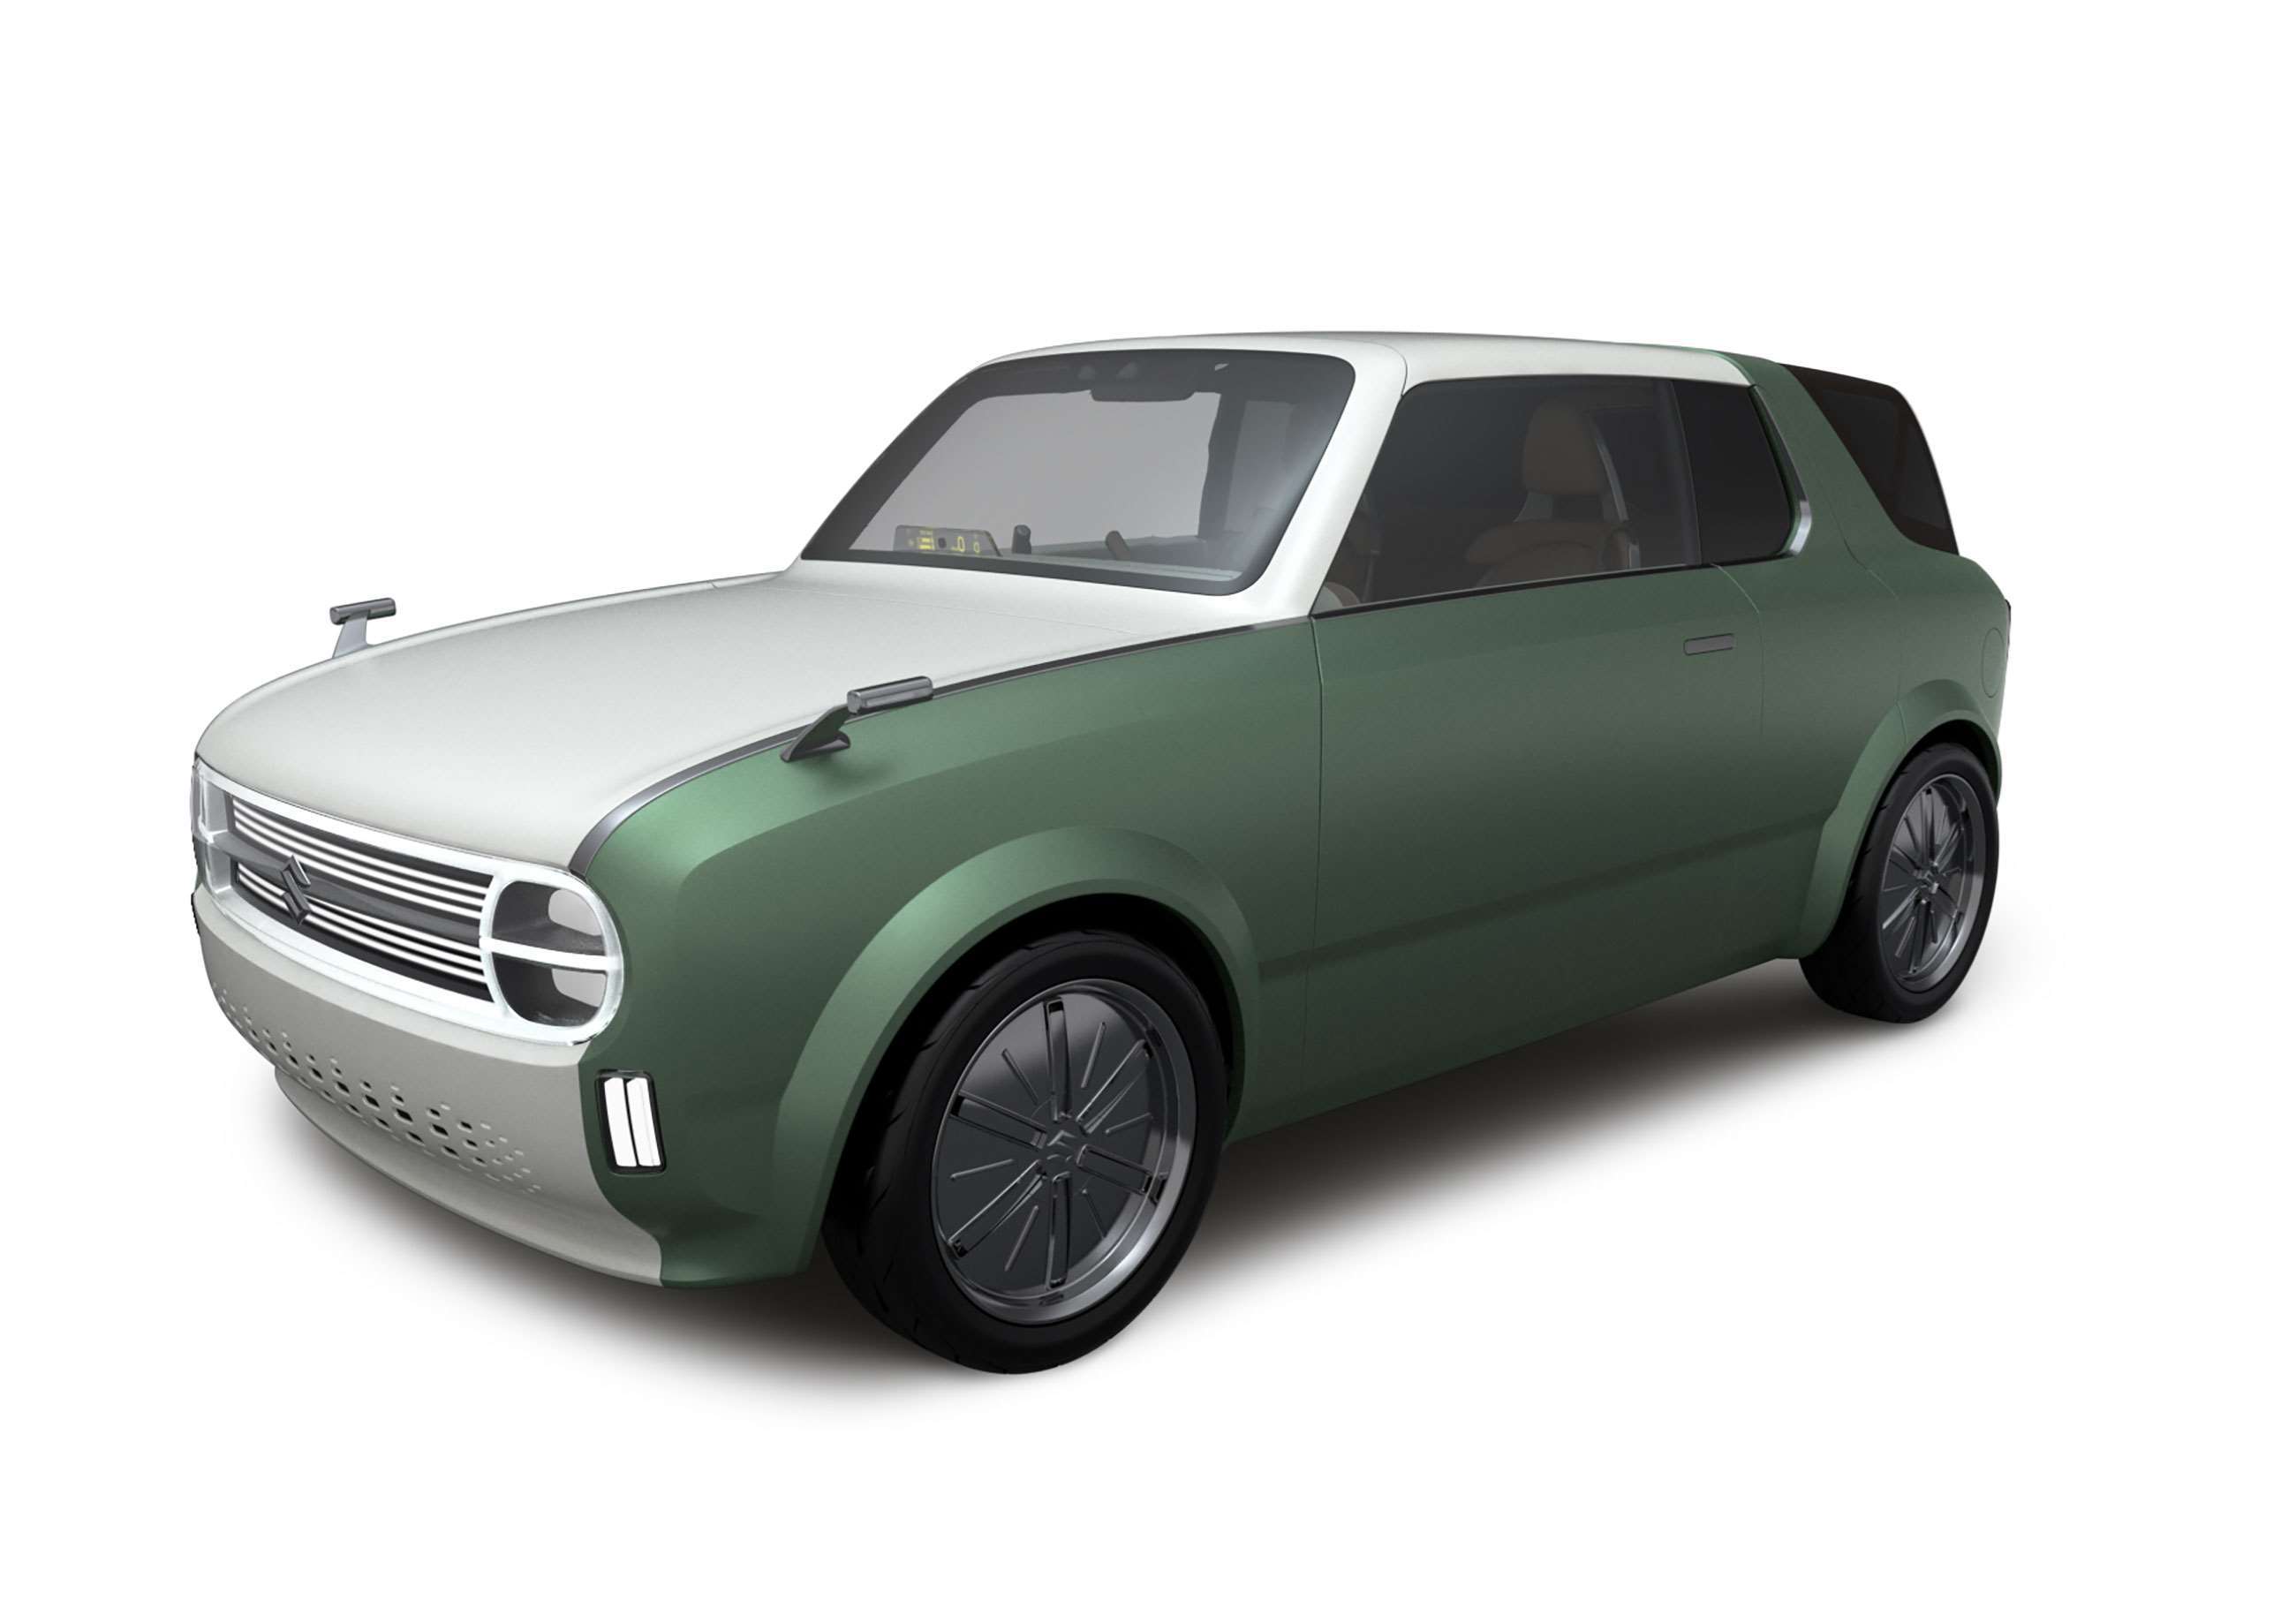 cool-japanese-concept-cars-9-suzuki-waku-spo-goodwood-02062020.jpg